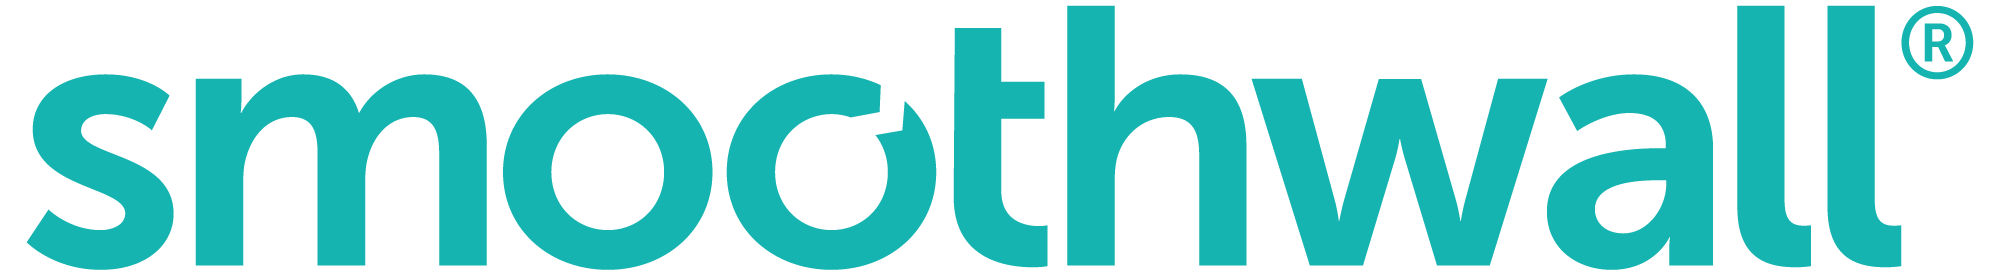 smoothwall logo